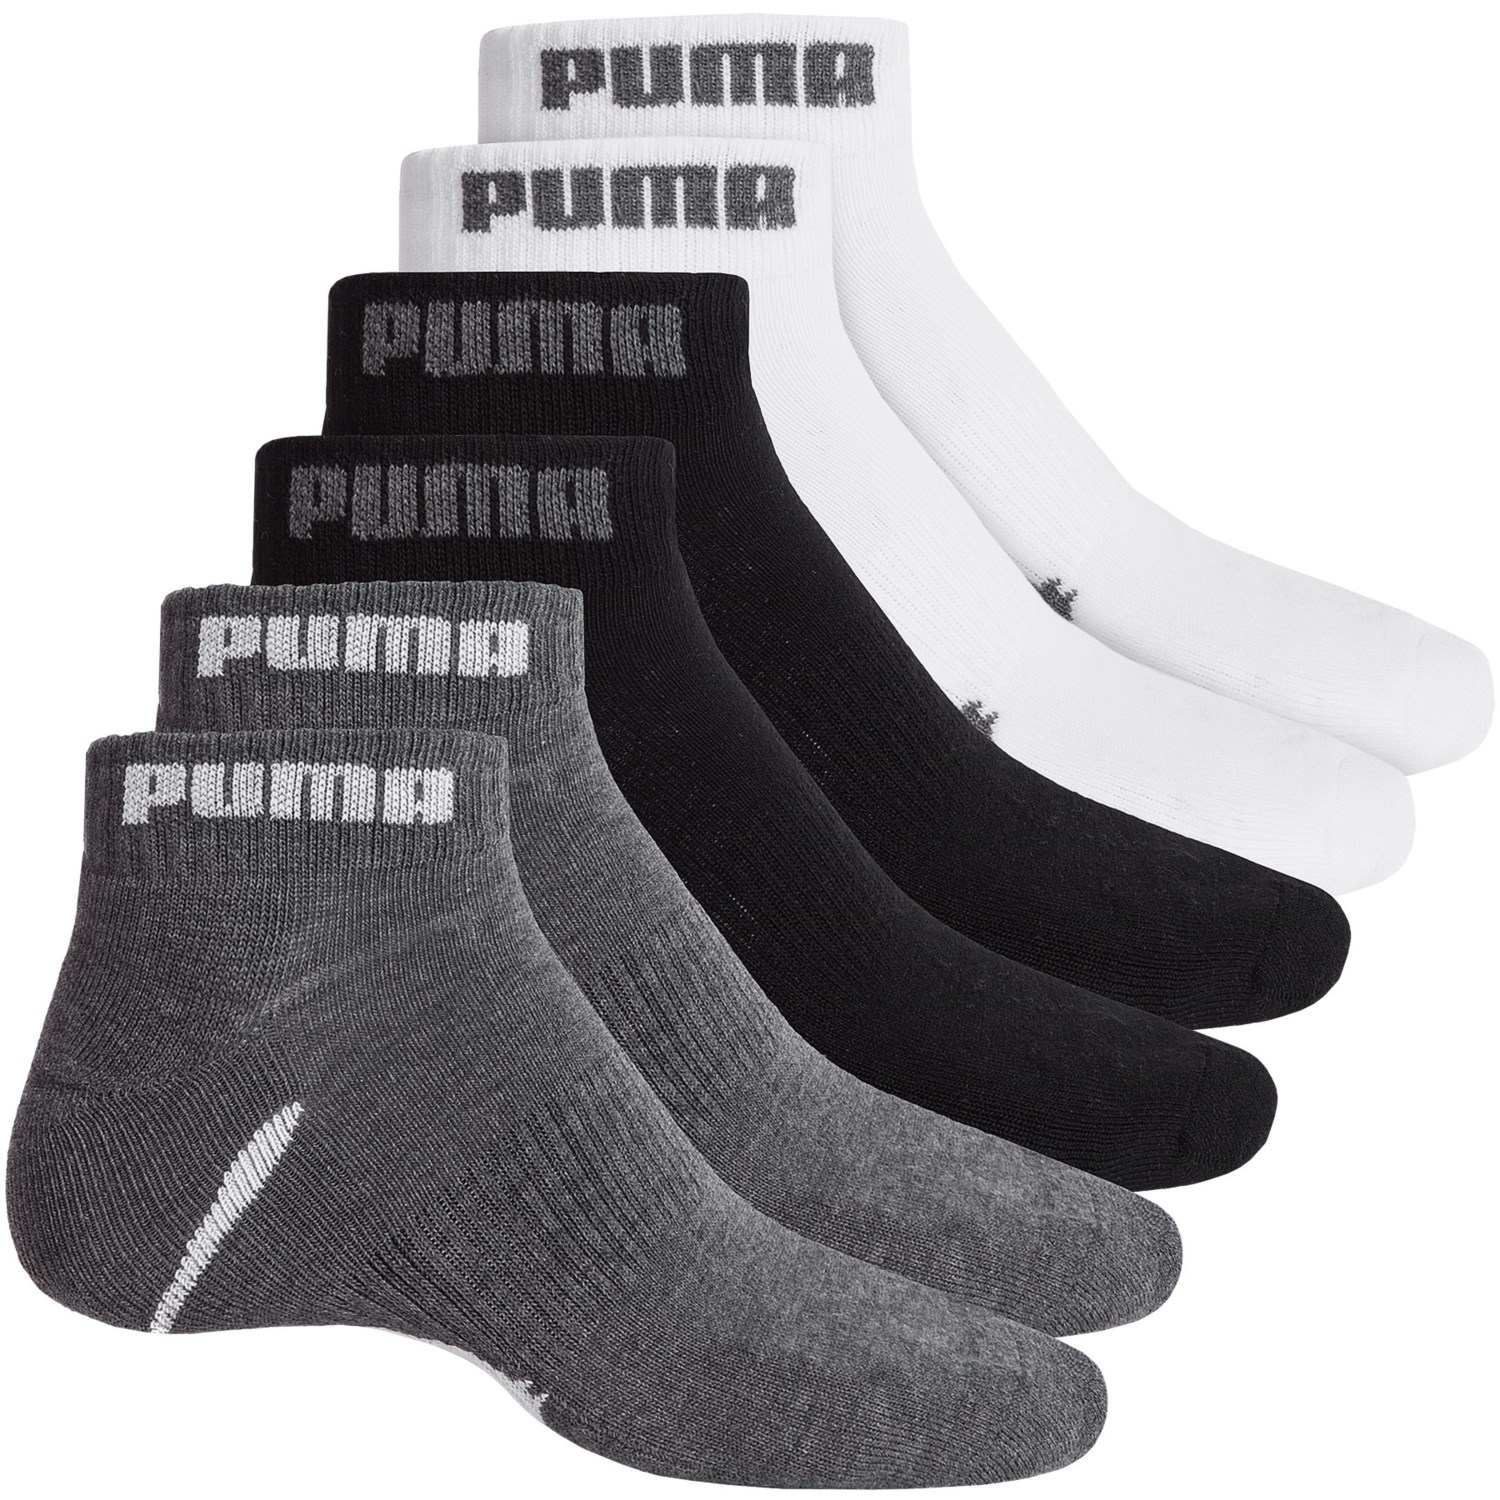 Puma Half Terry Socks (For Men) - Save 55%